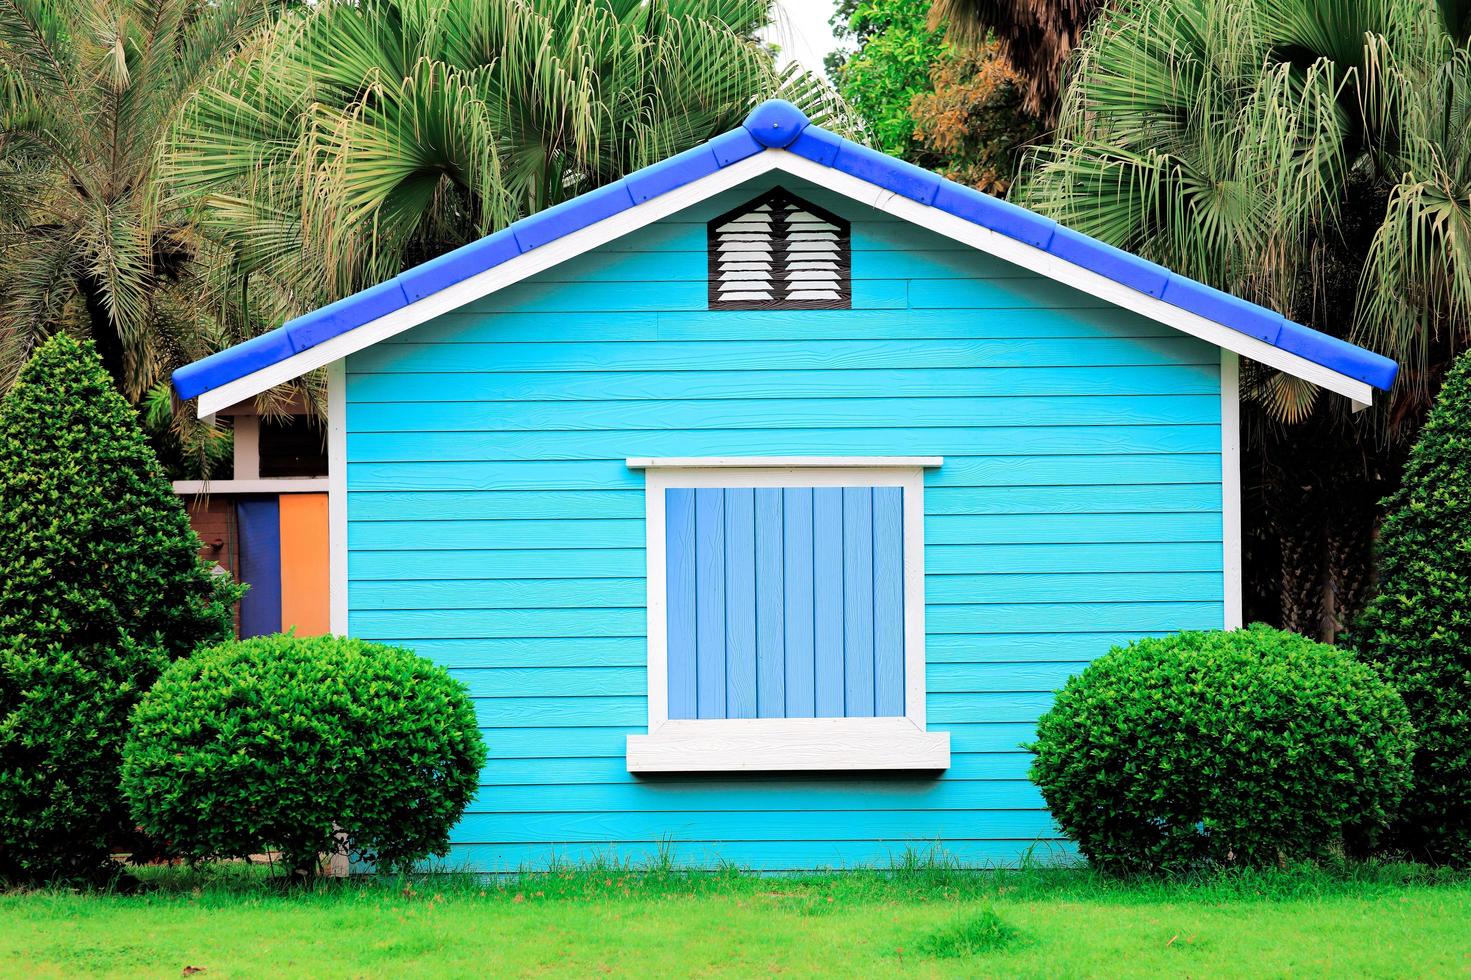 40 ideas de casas de colores: Amarillas, azules, celestes, morado, rojo